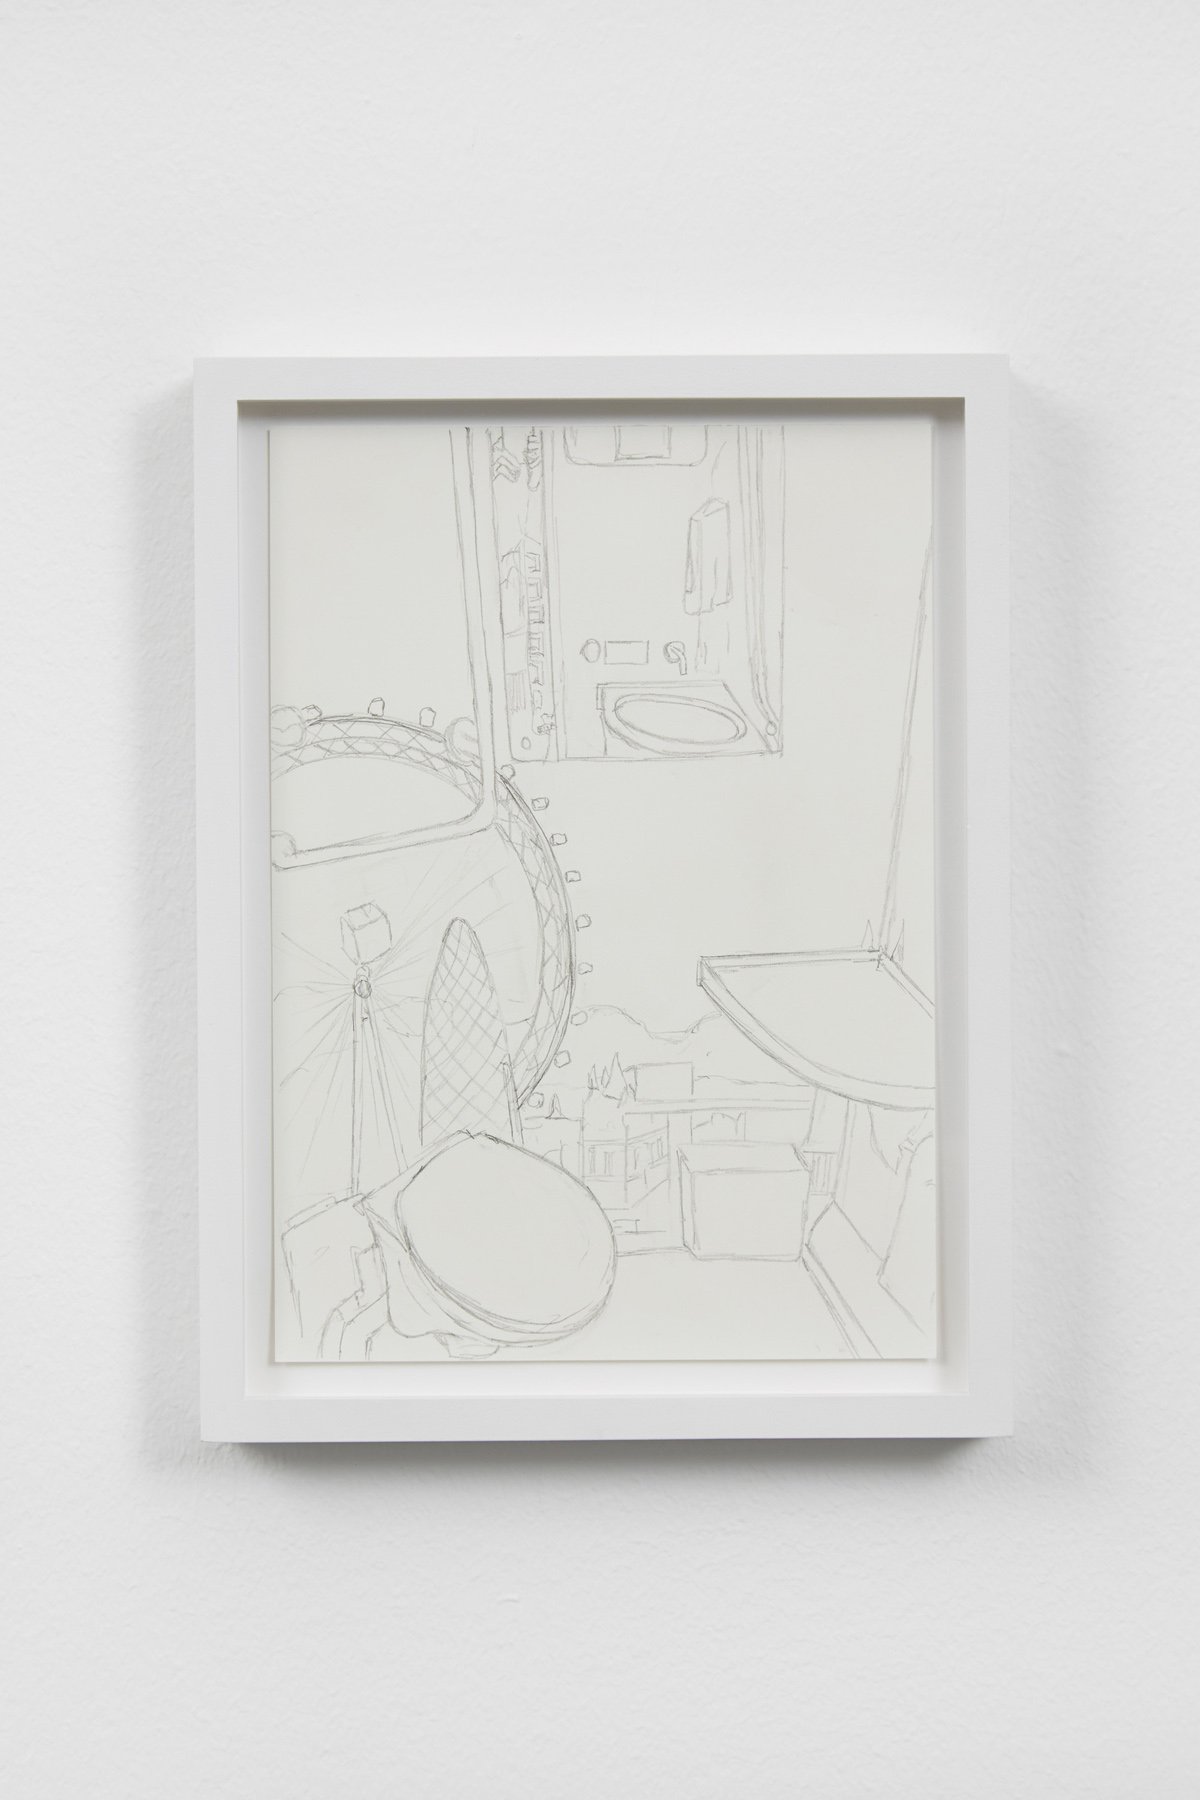 Juliette BlightmanDay 321b, 2016Graphite on paper21 x 15 cm